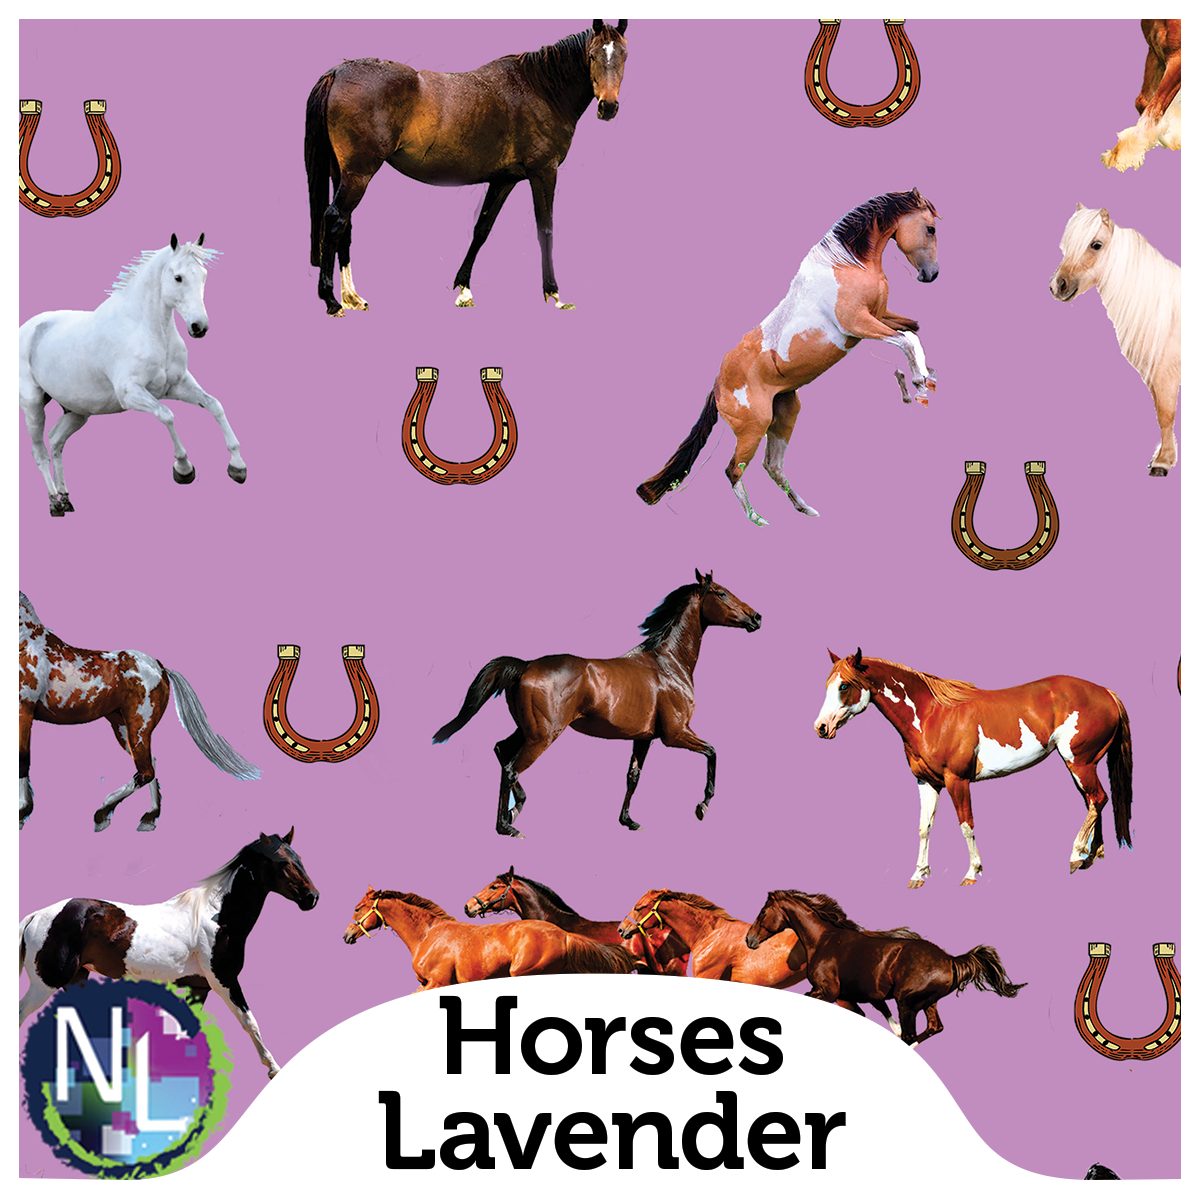 Horses (Lavender)